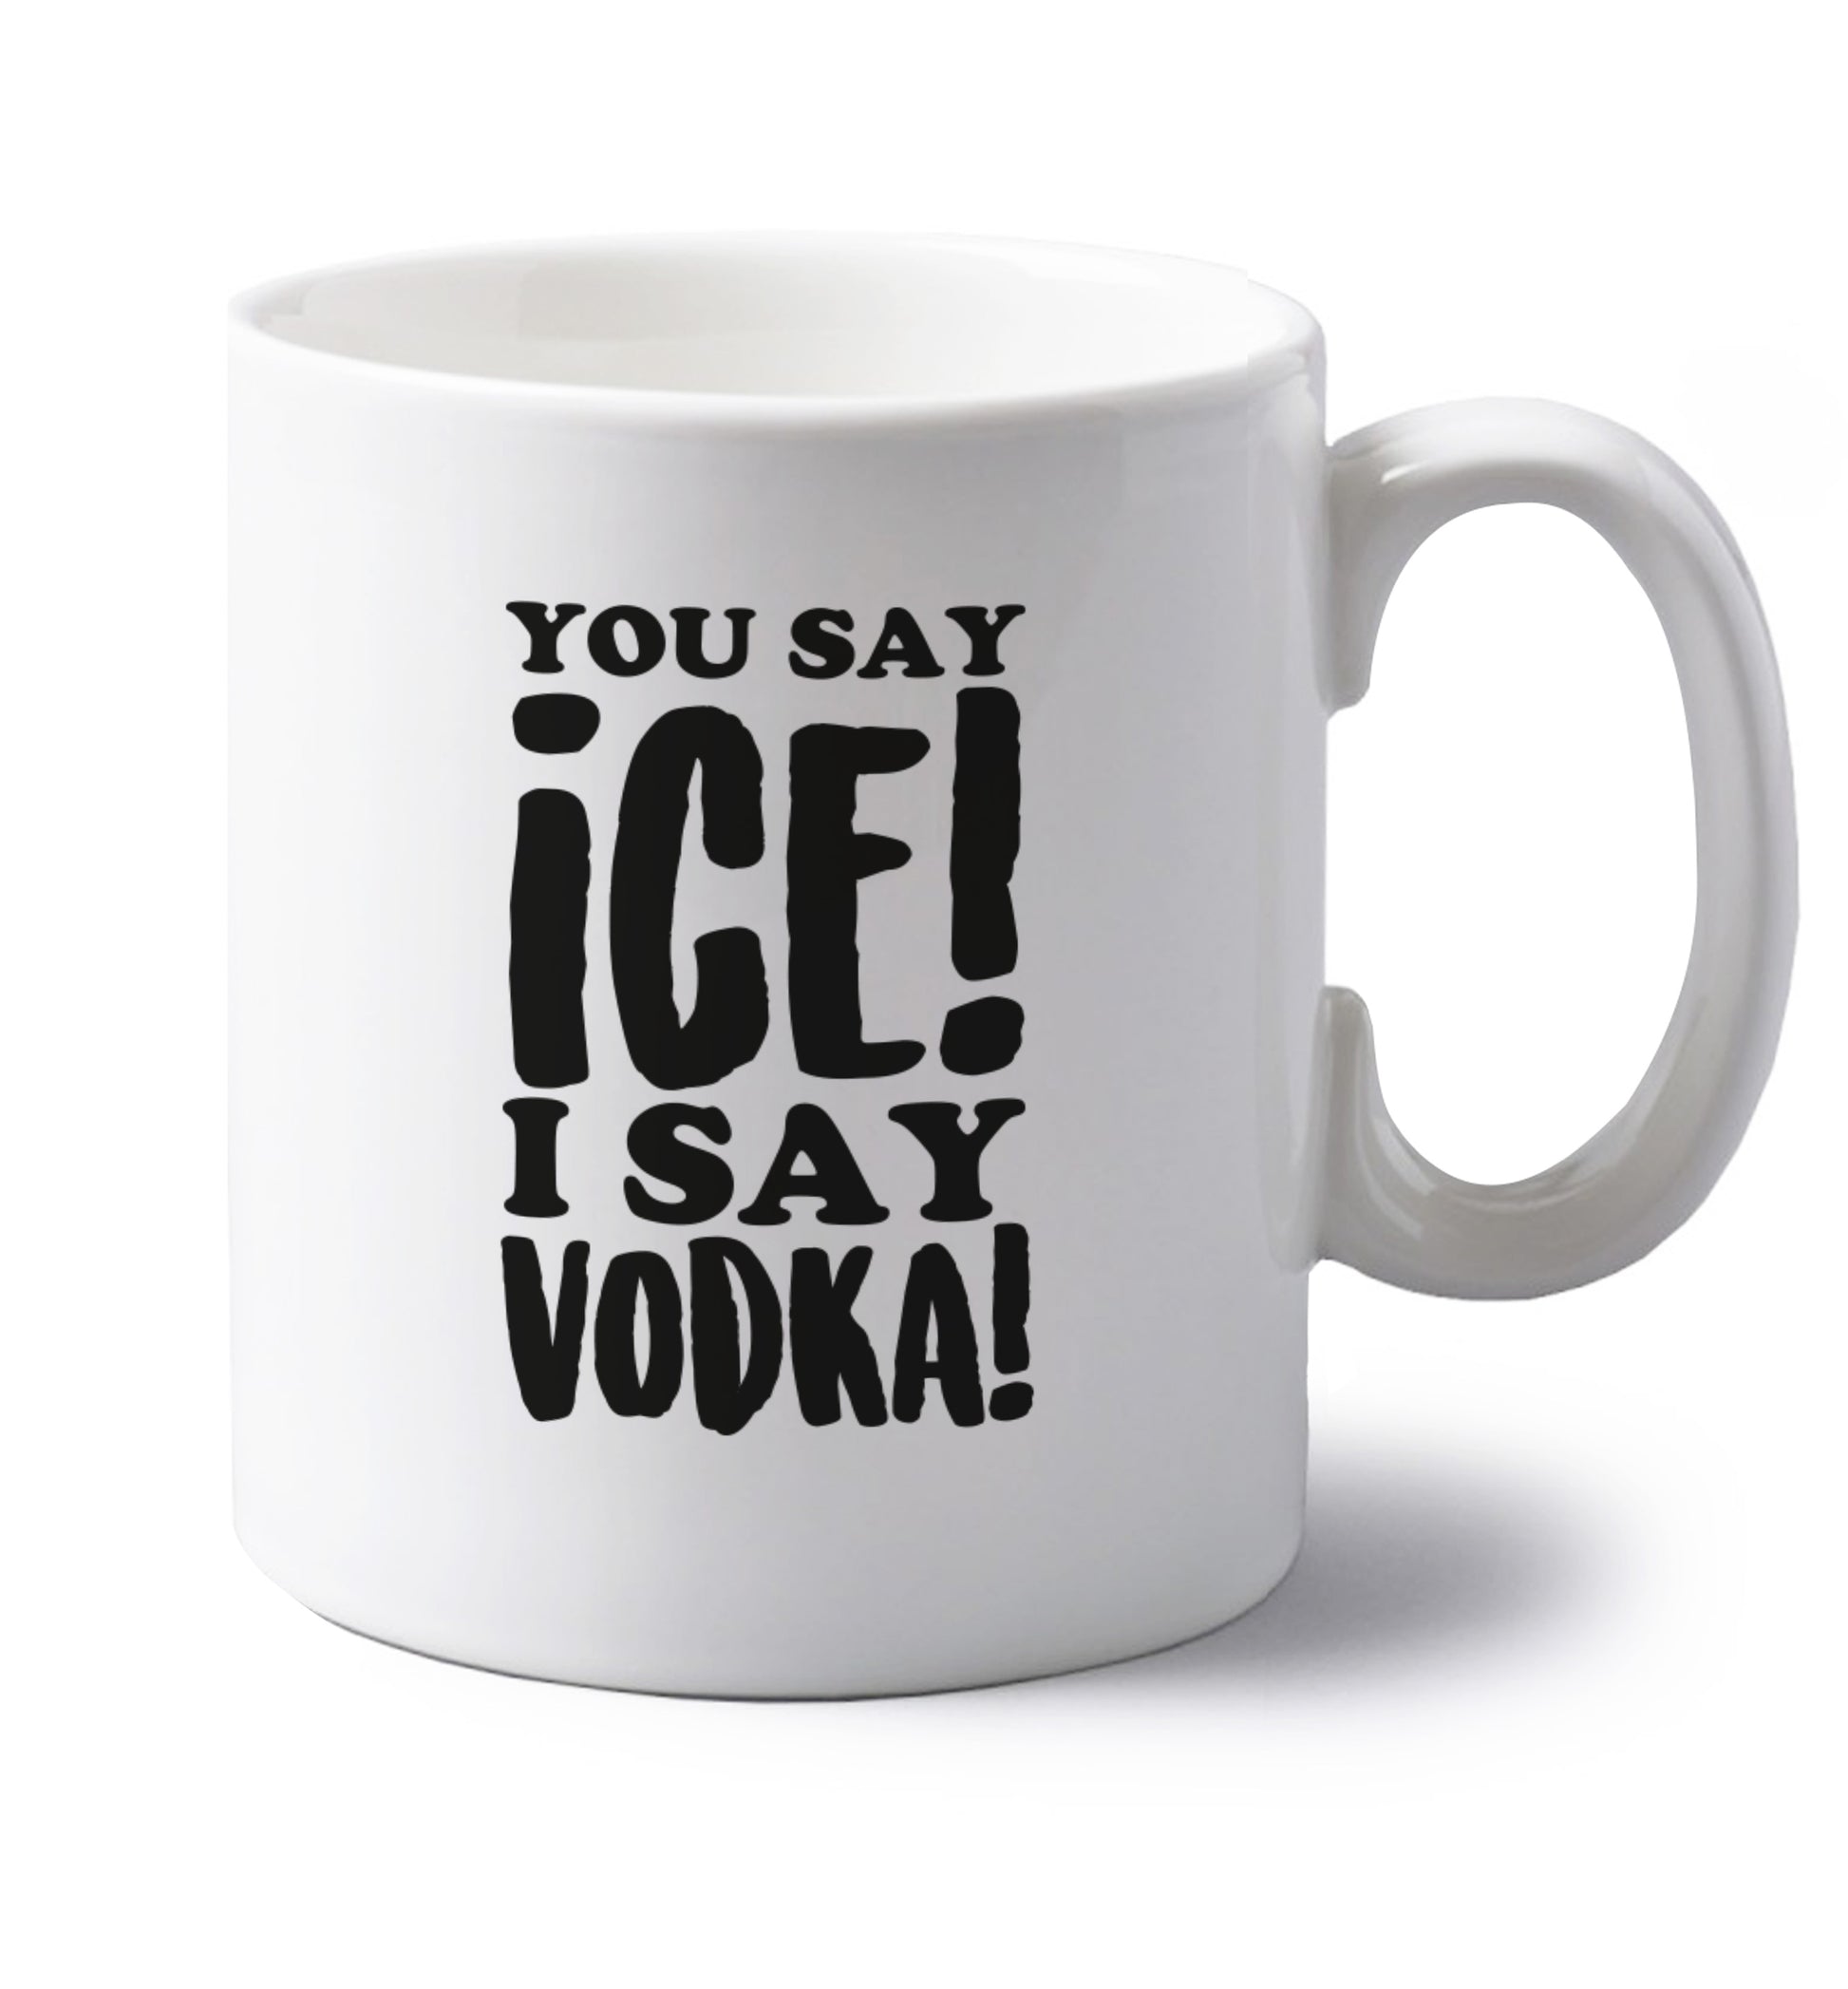 You say ice I say vodka! left handed white ceramic mug 